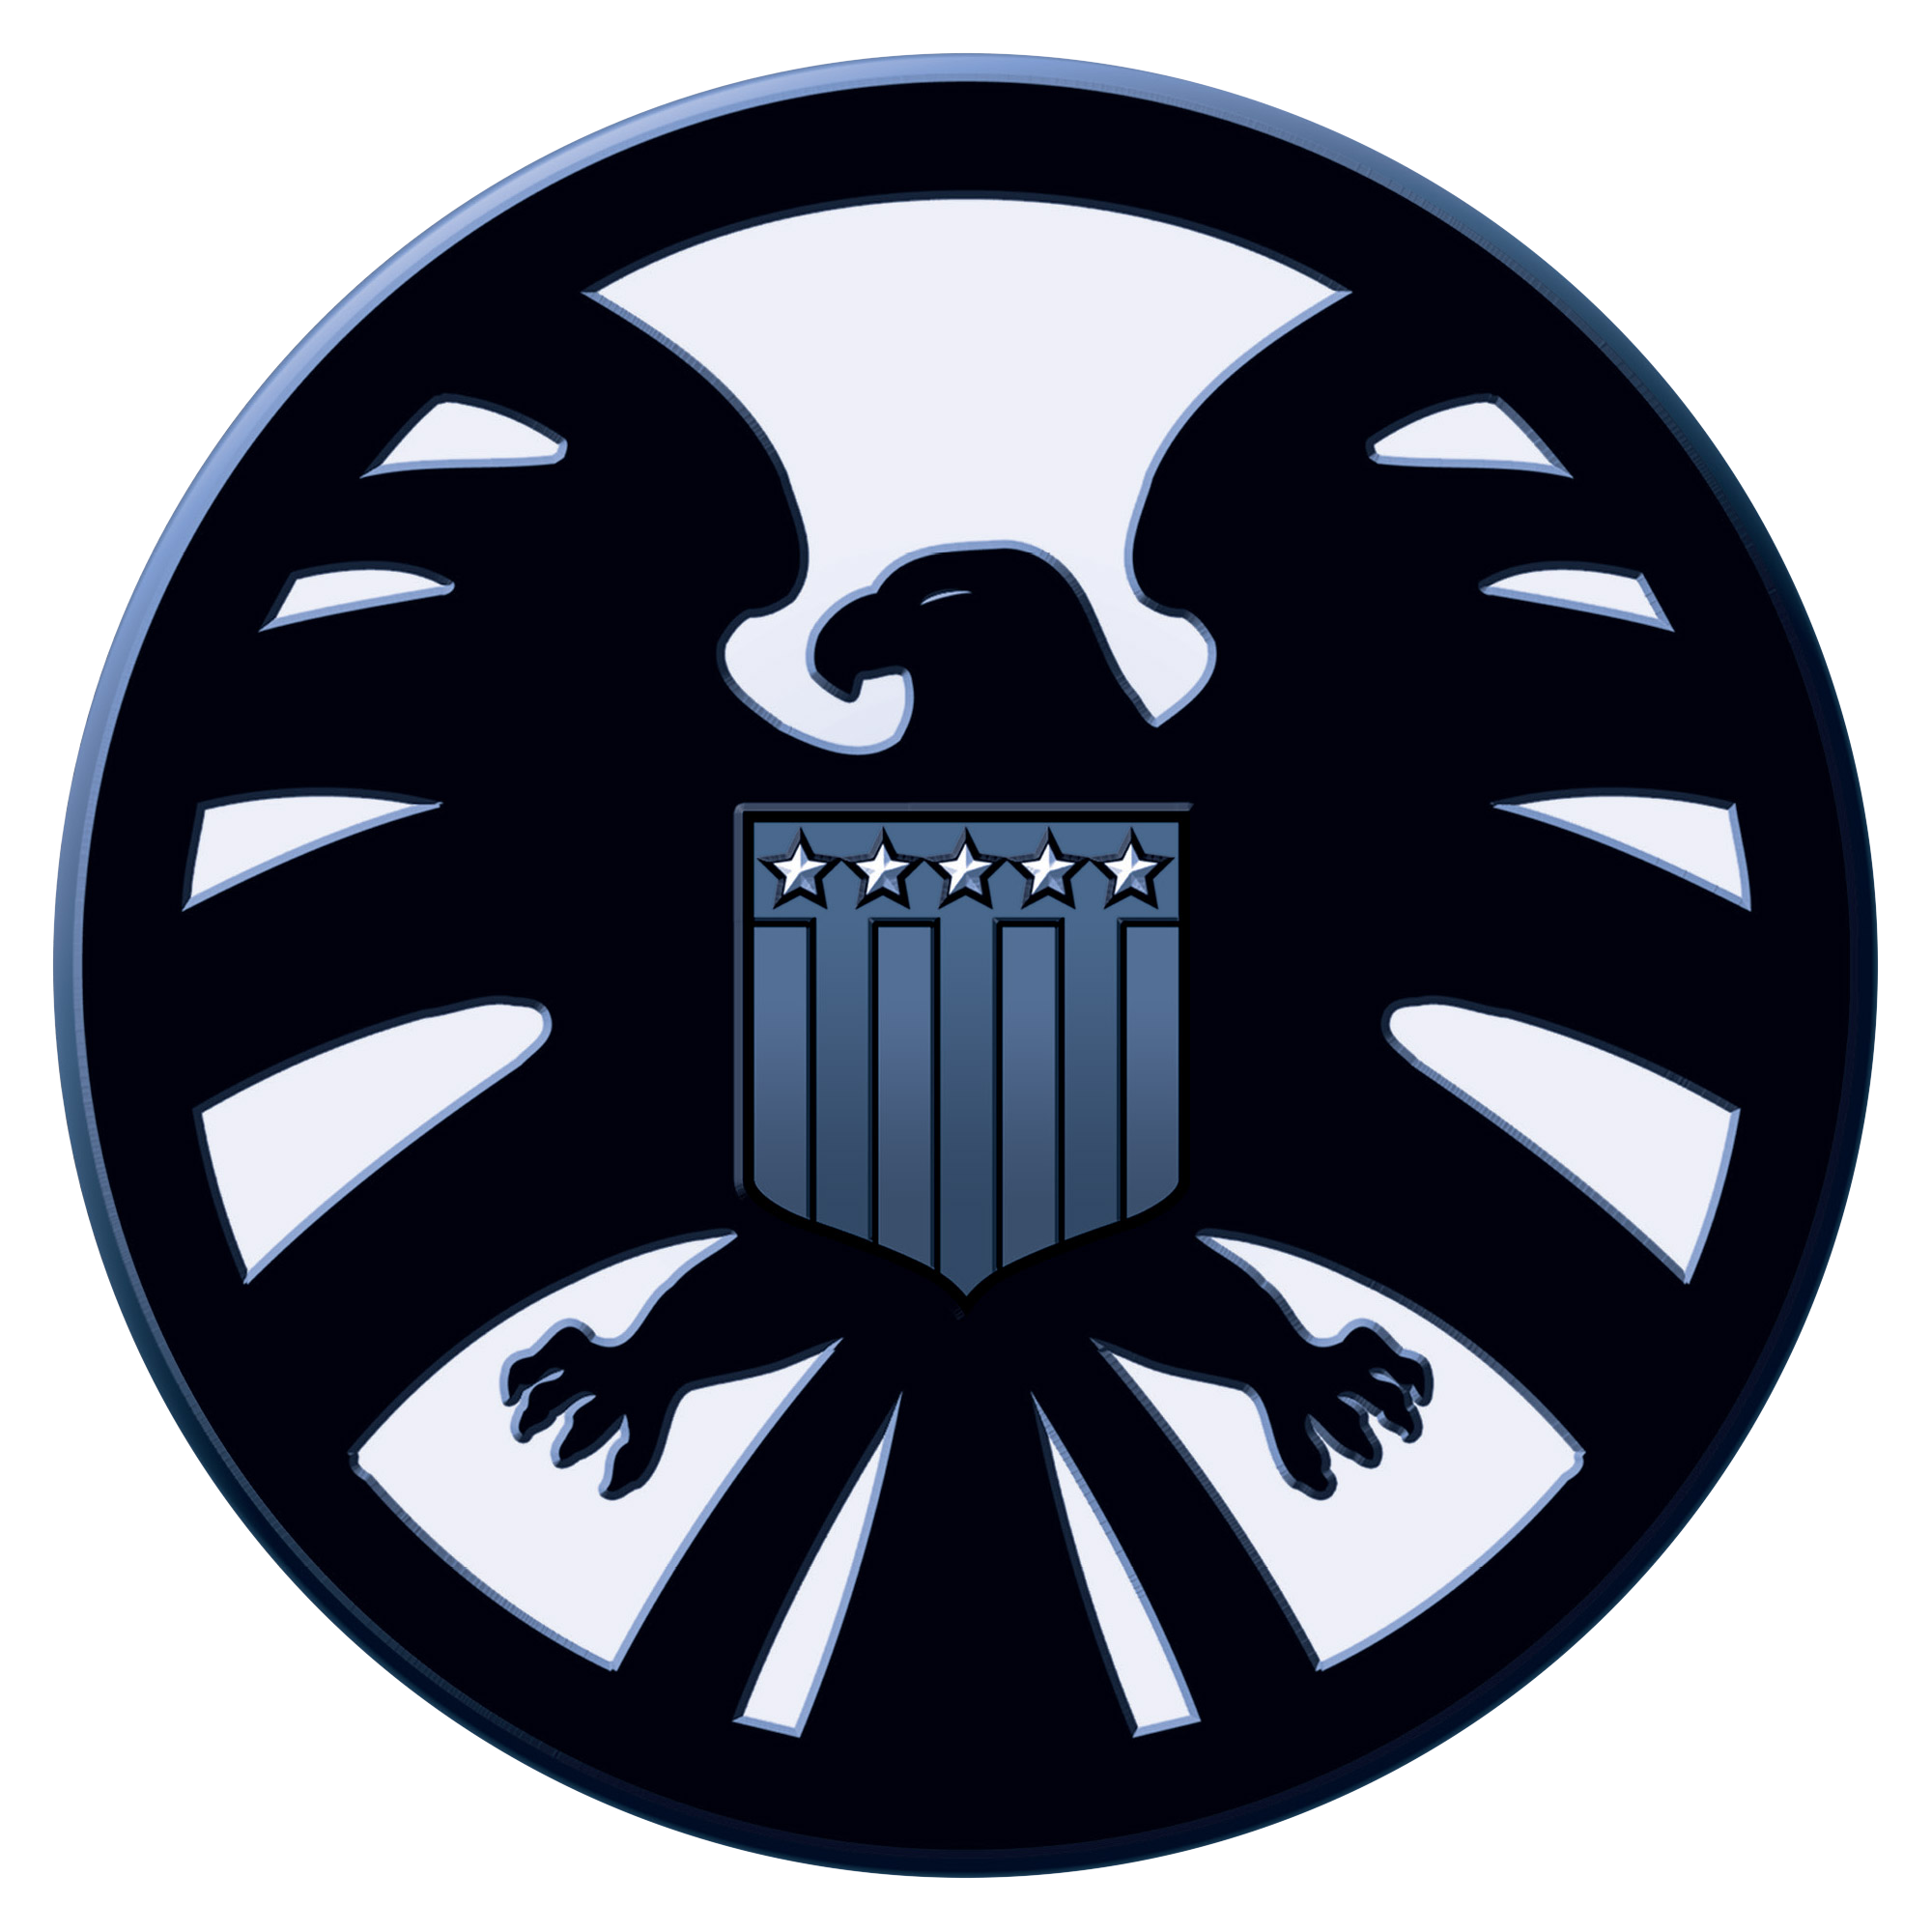 File:Garrett Wade logo.gif - Wikipedia